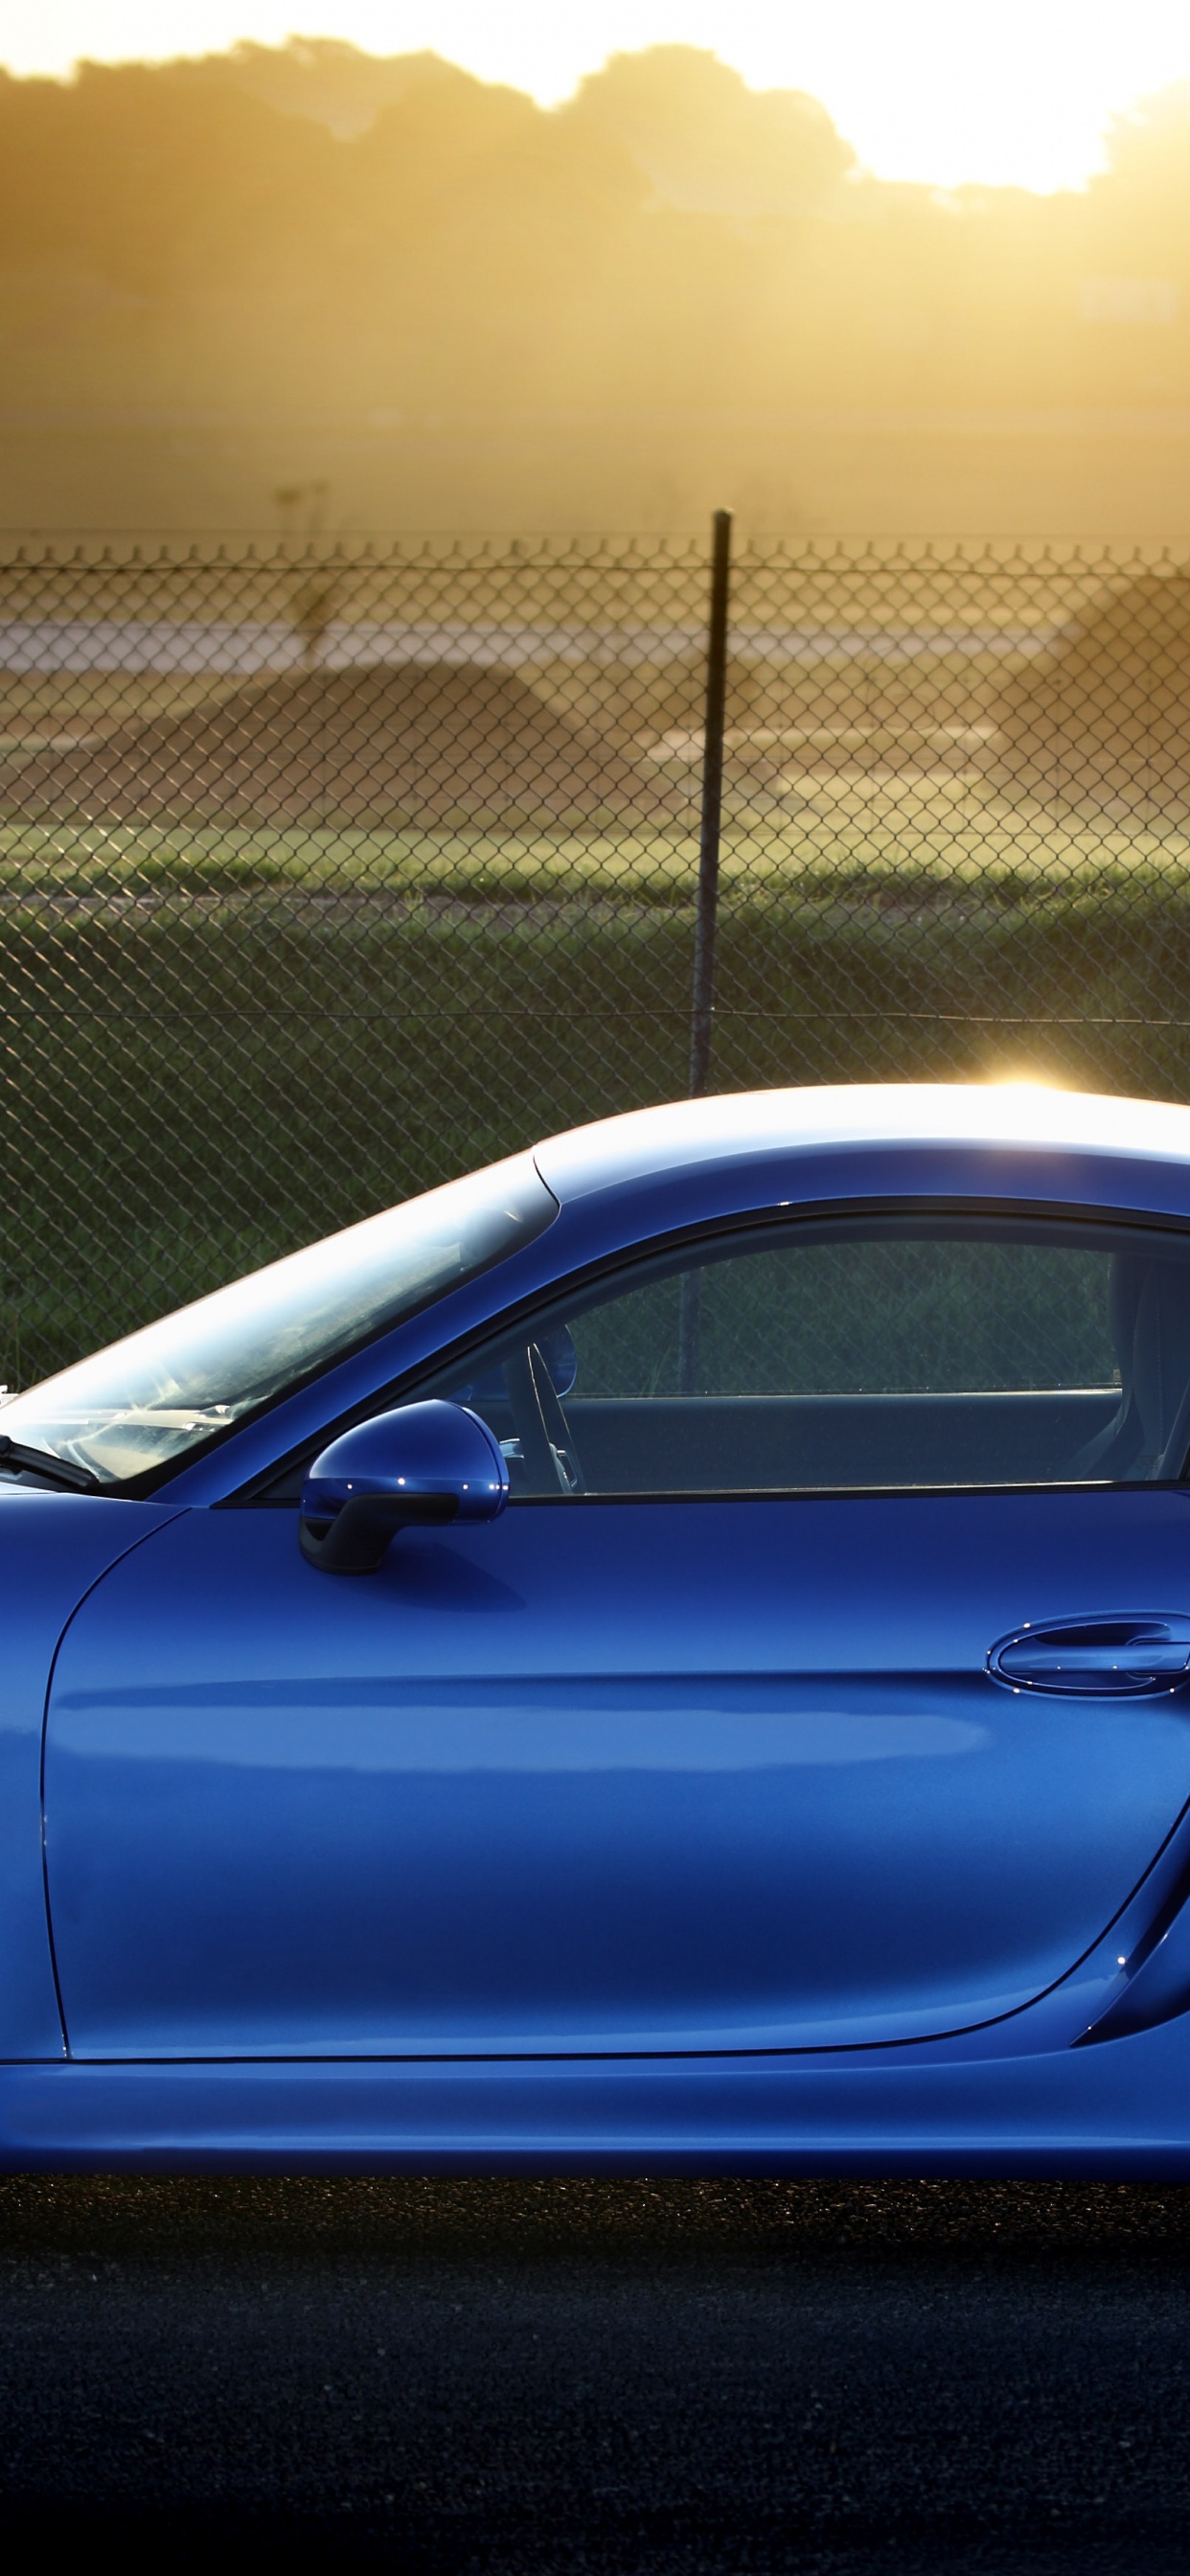 Blue Porsche 911 Parked Near Gray Metal Fence During Daytime. Wallpaper in 1242x2688 Resolution